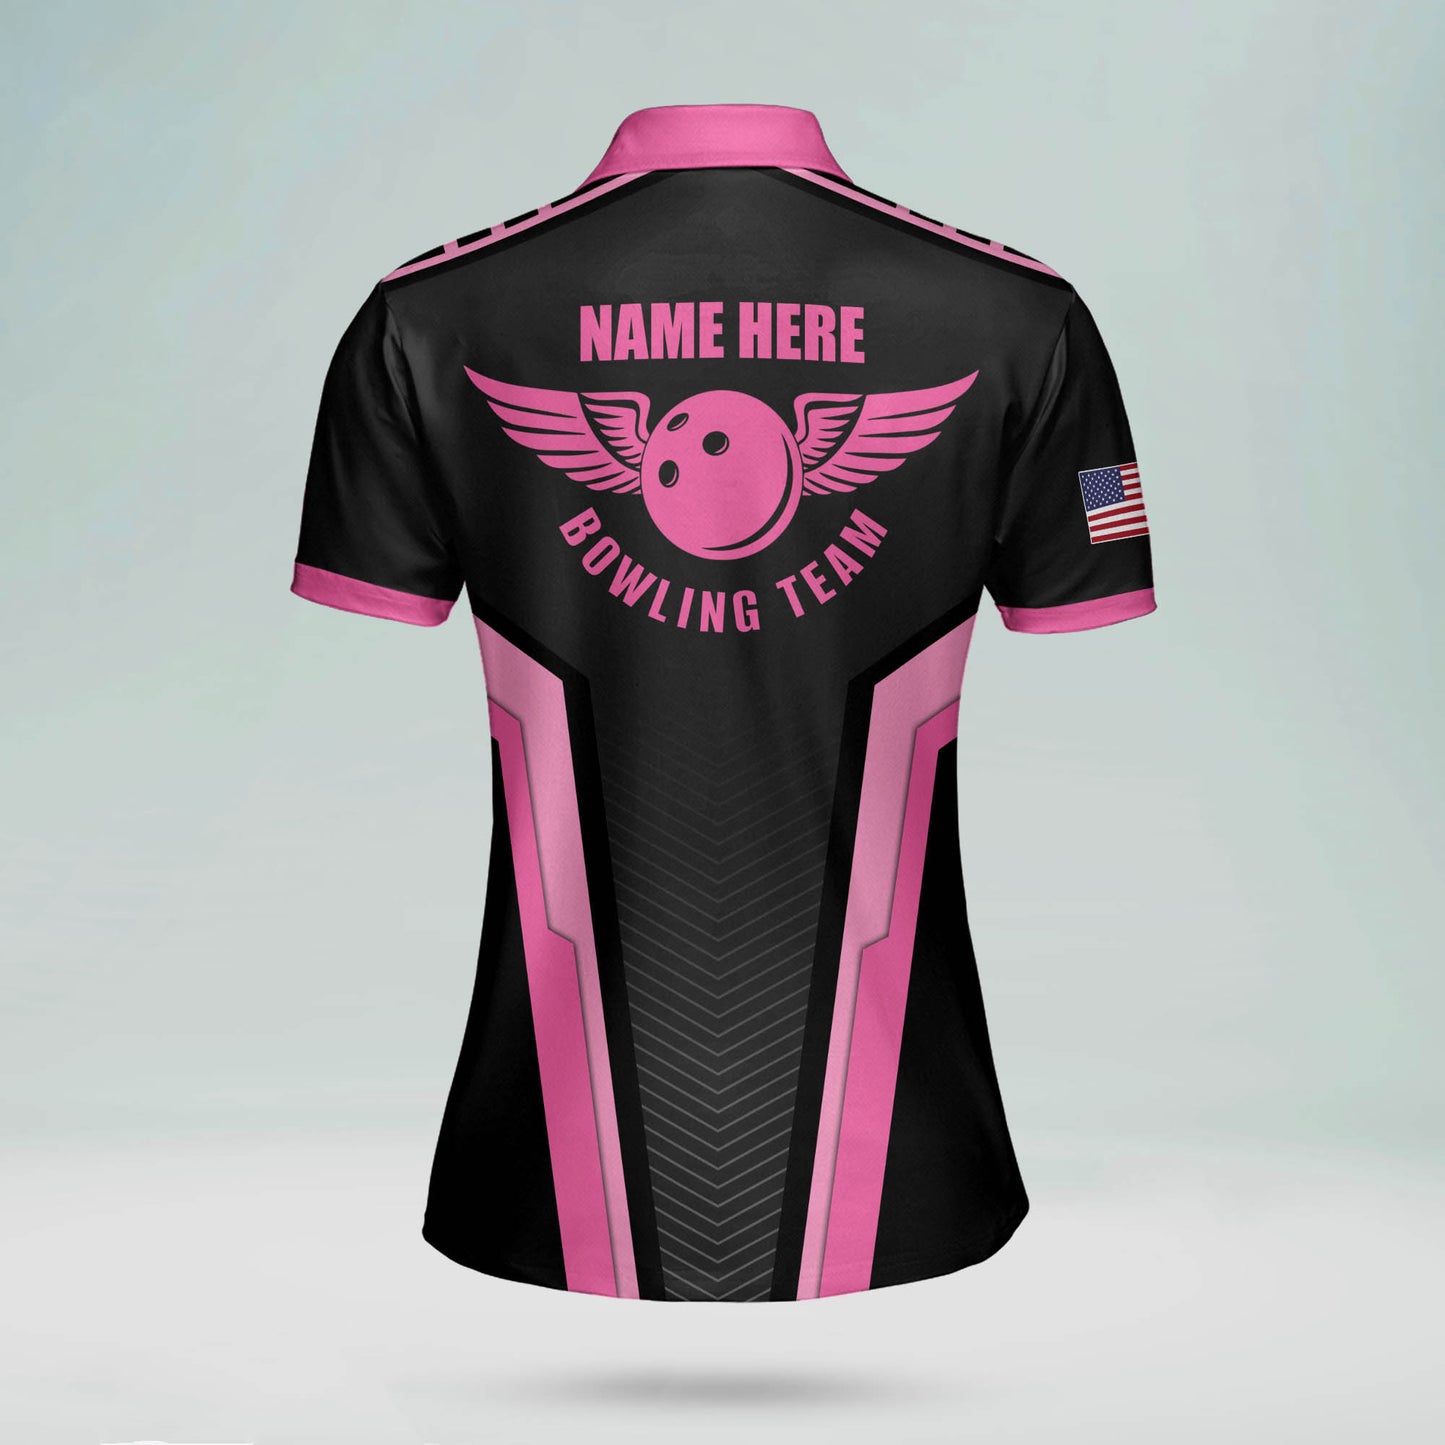 Custom Bowling Shirts For Women - Women's Funny Bowling Shirts With Name - Heartbeat Pulse Line Pink Bowling Shirts - American Flag Bowling Shirt BW0073